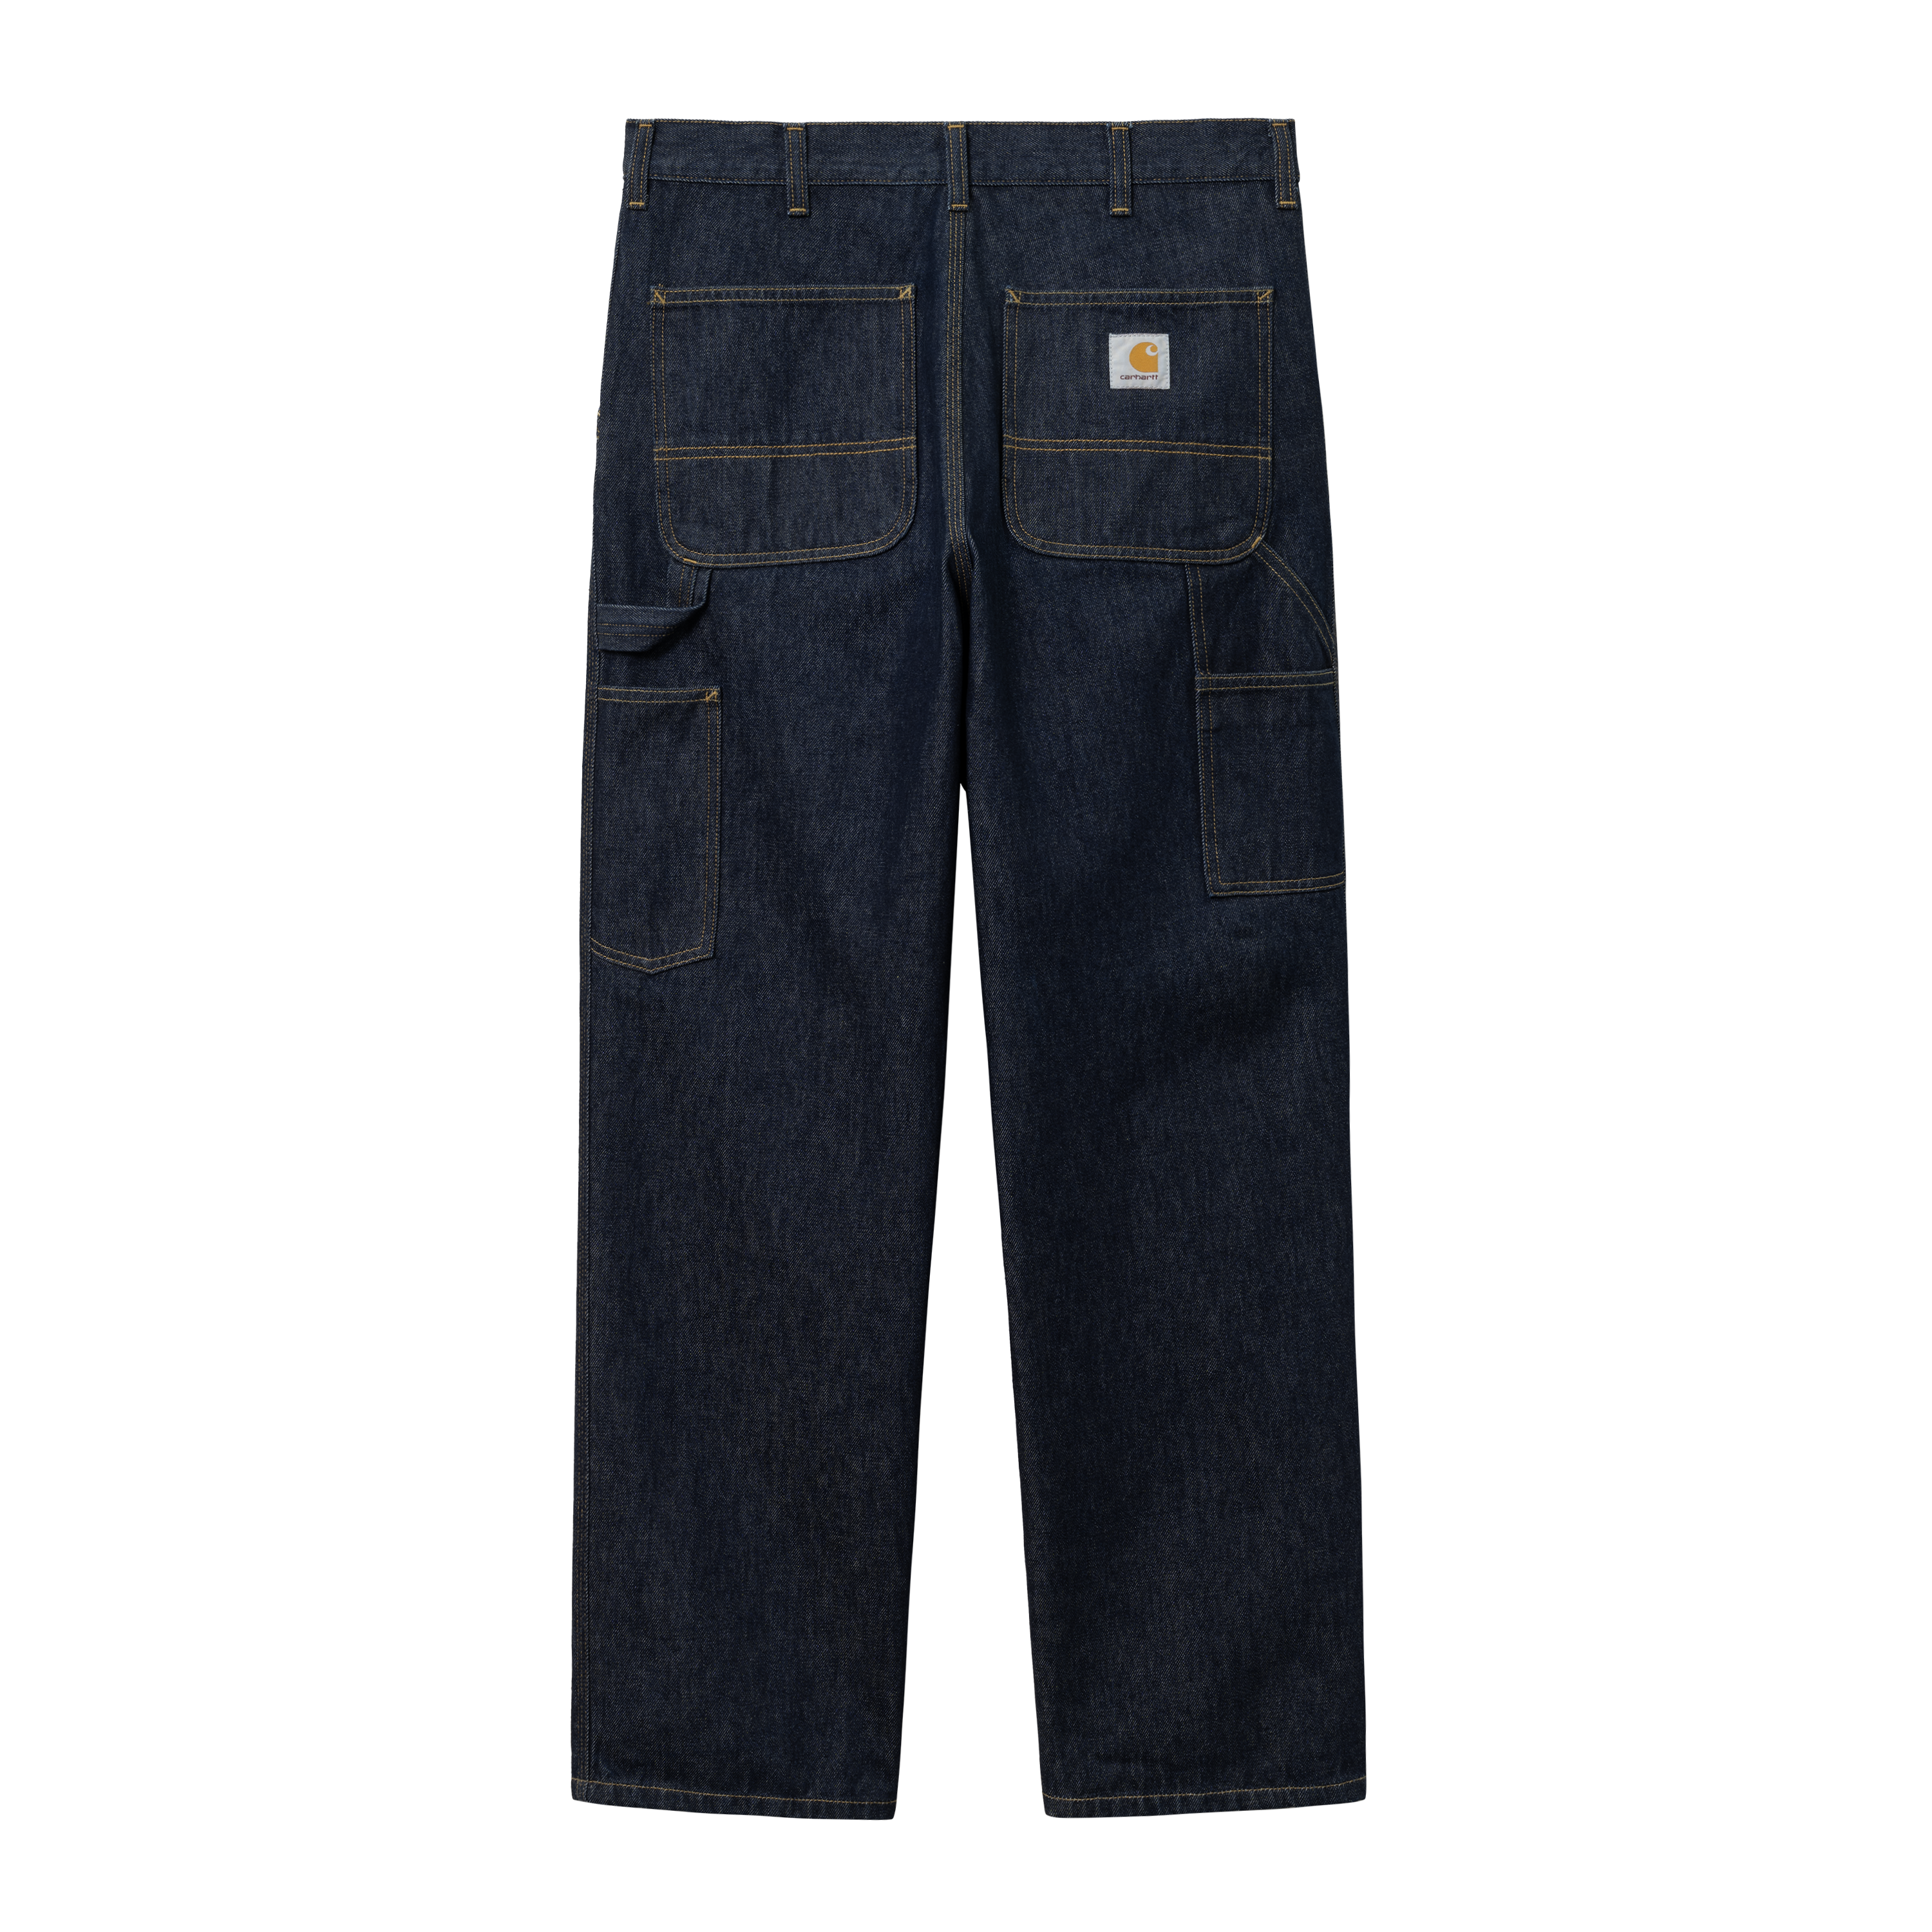 Carhartt WIP wide leg relaxed denim jeans in dark indigo